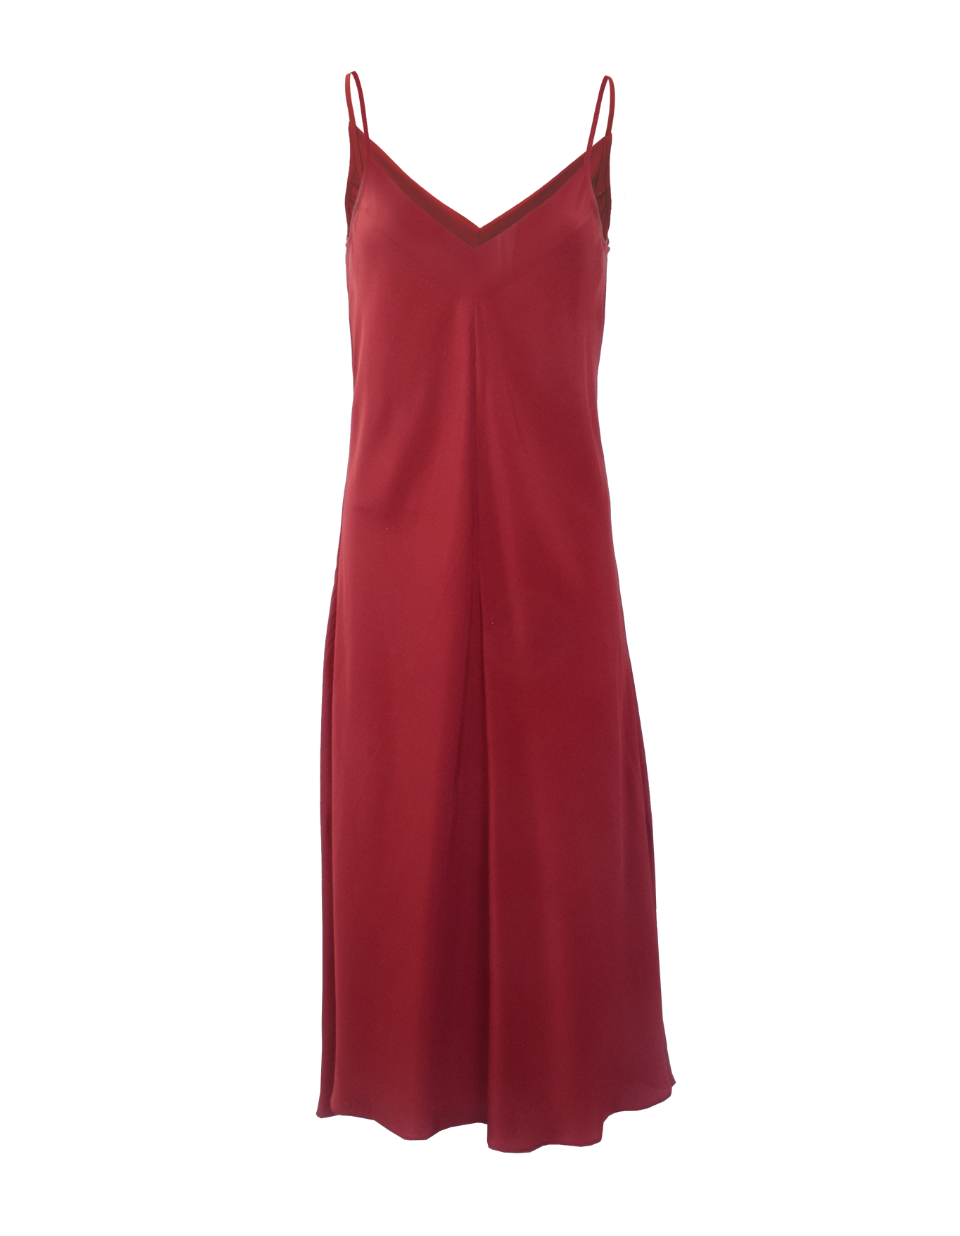 Slip Dress (Ruby Red)